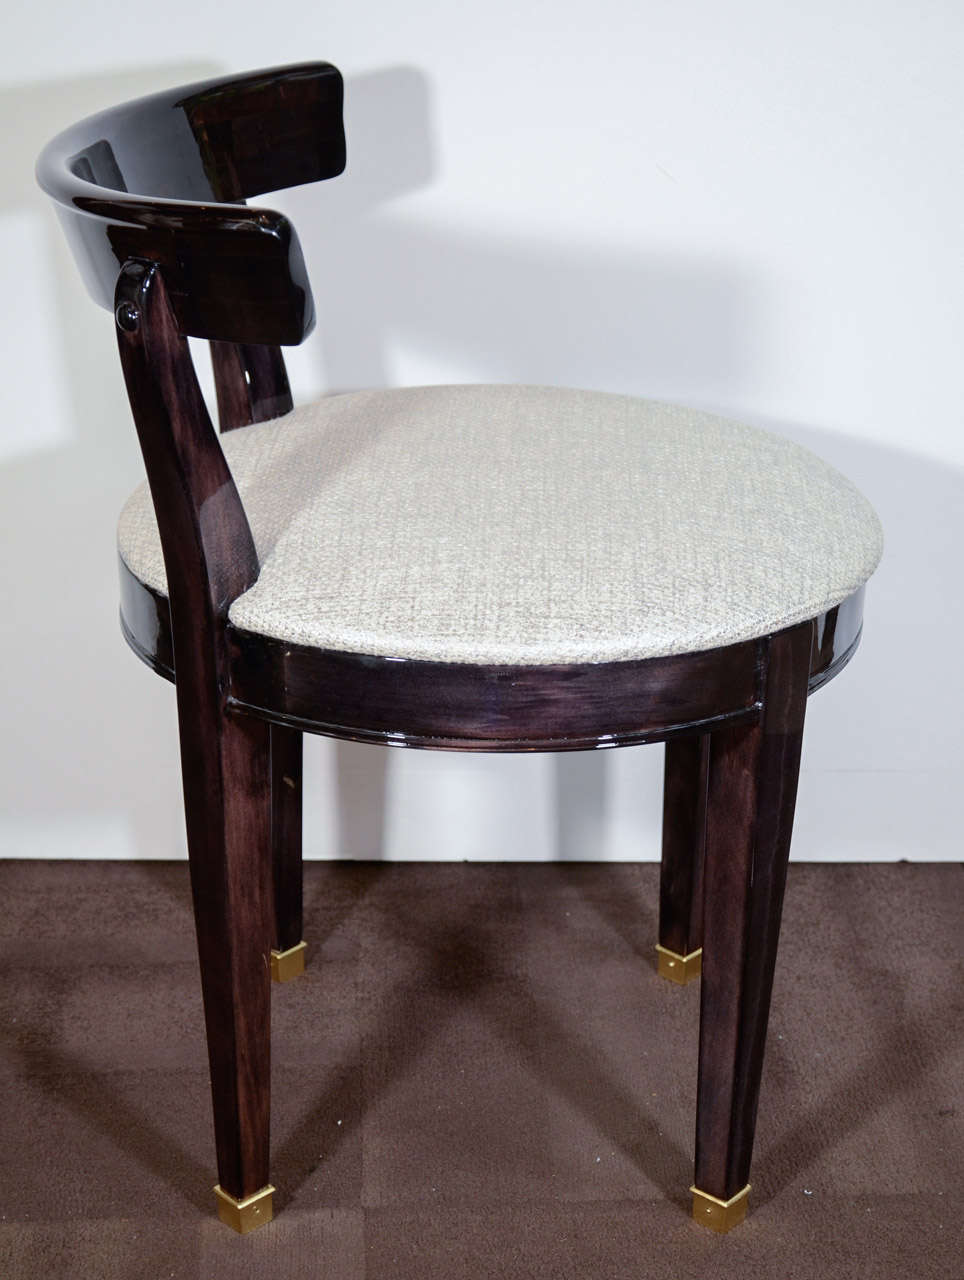 American Art Deco Vanity Chair with Low Back Design in Ebonized Walnut